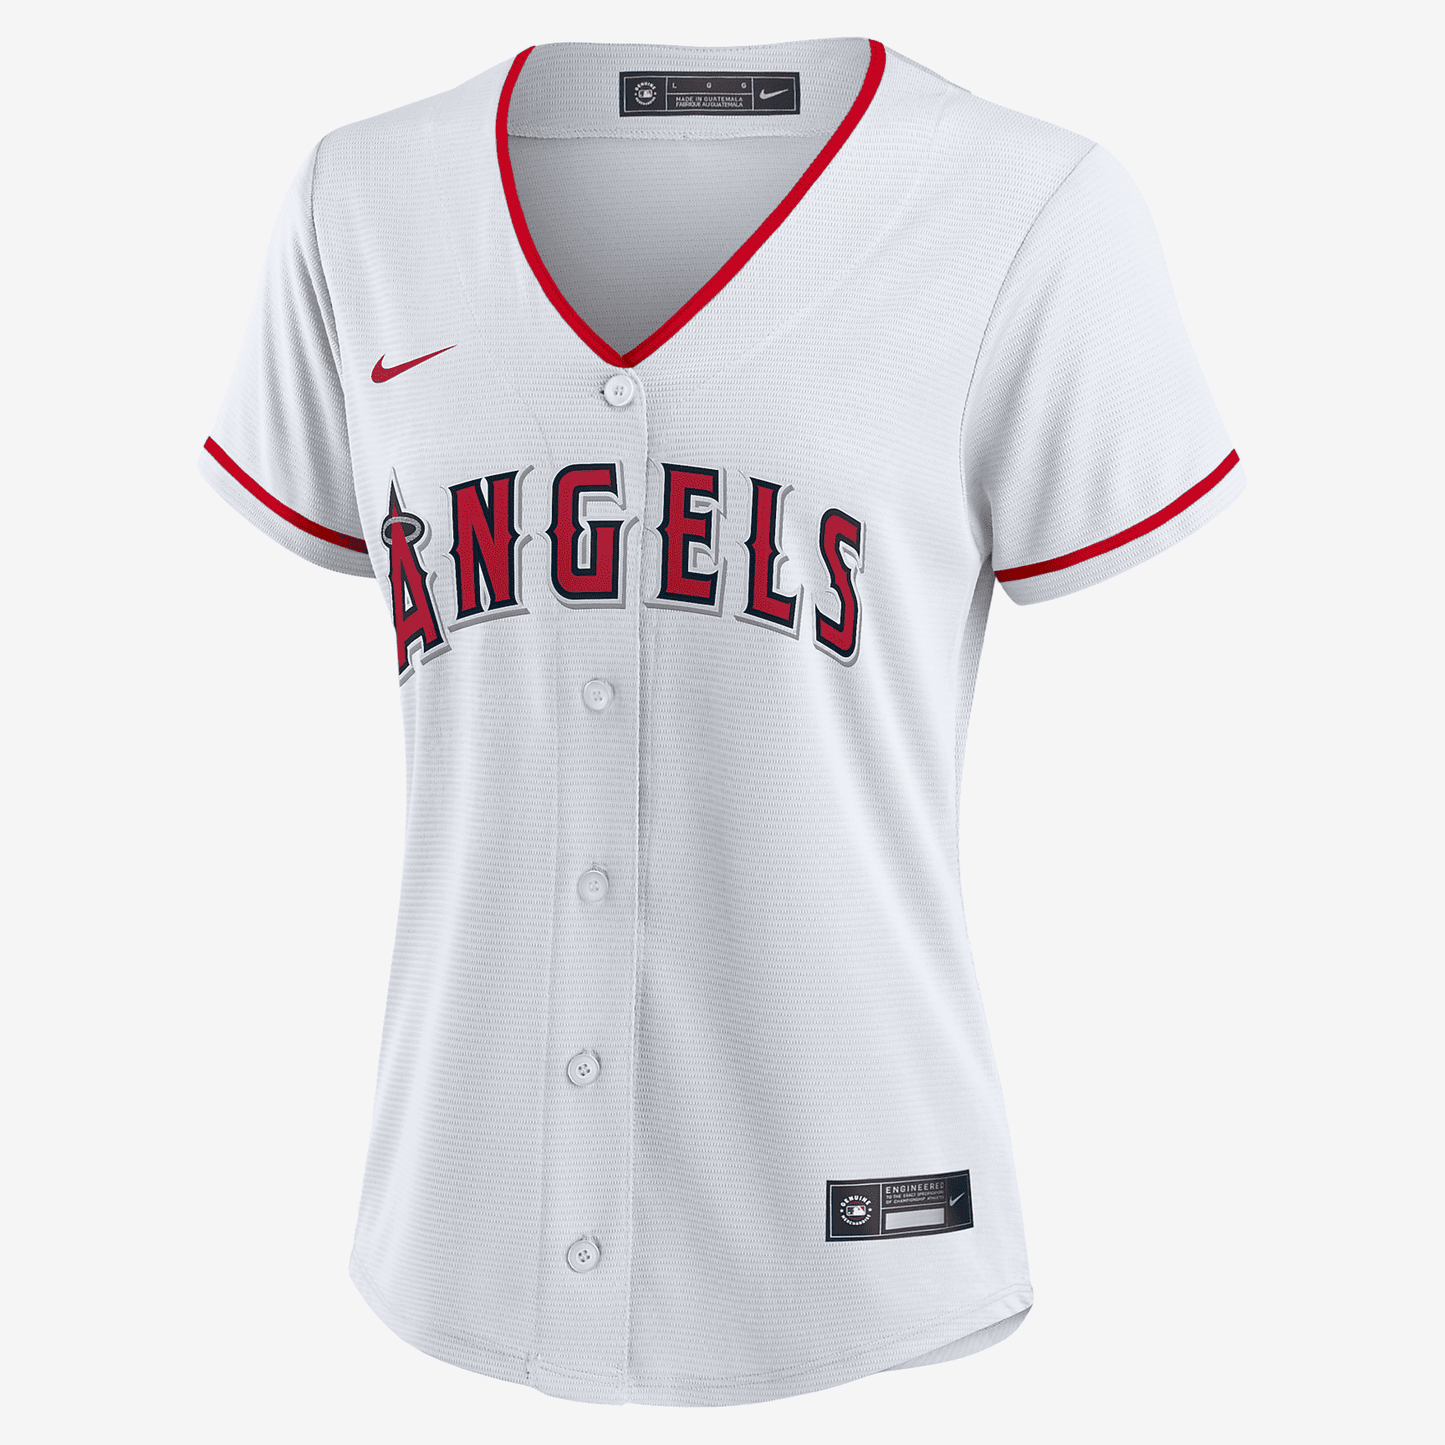 MLB Los Angeles Angels Women's Replica Baseball Jersey